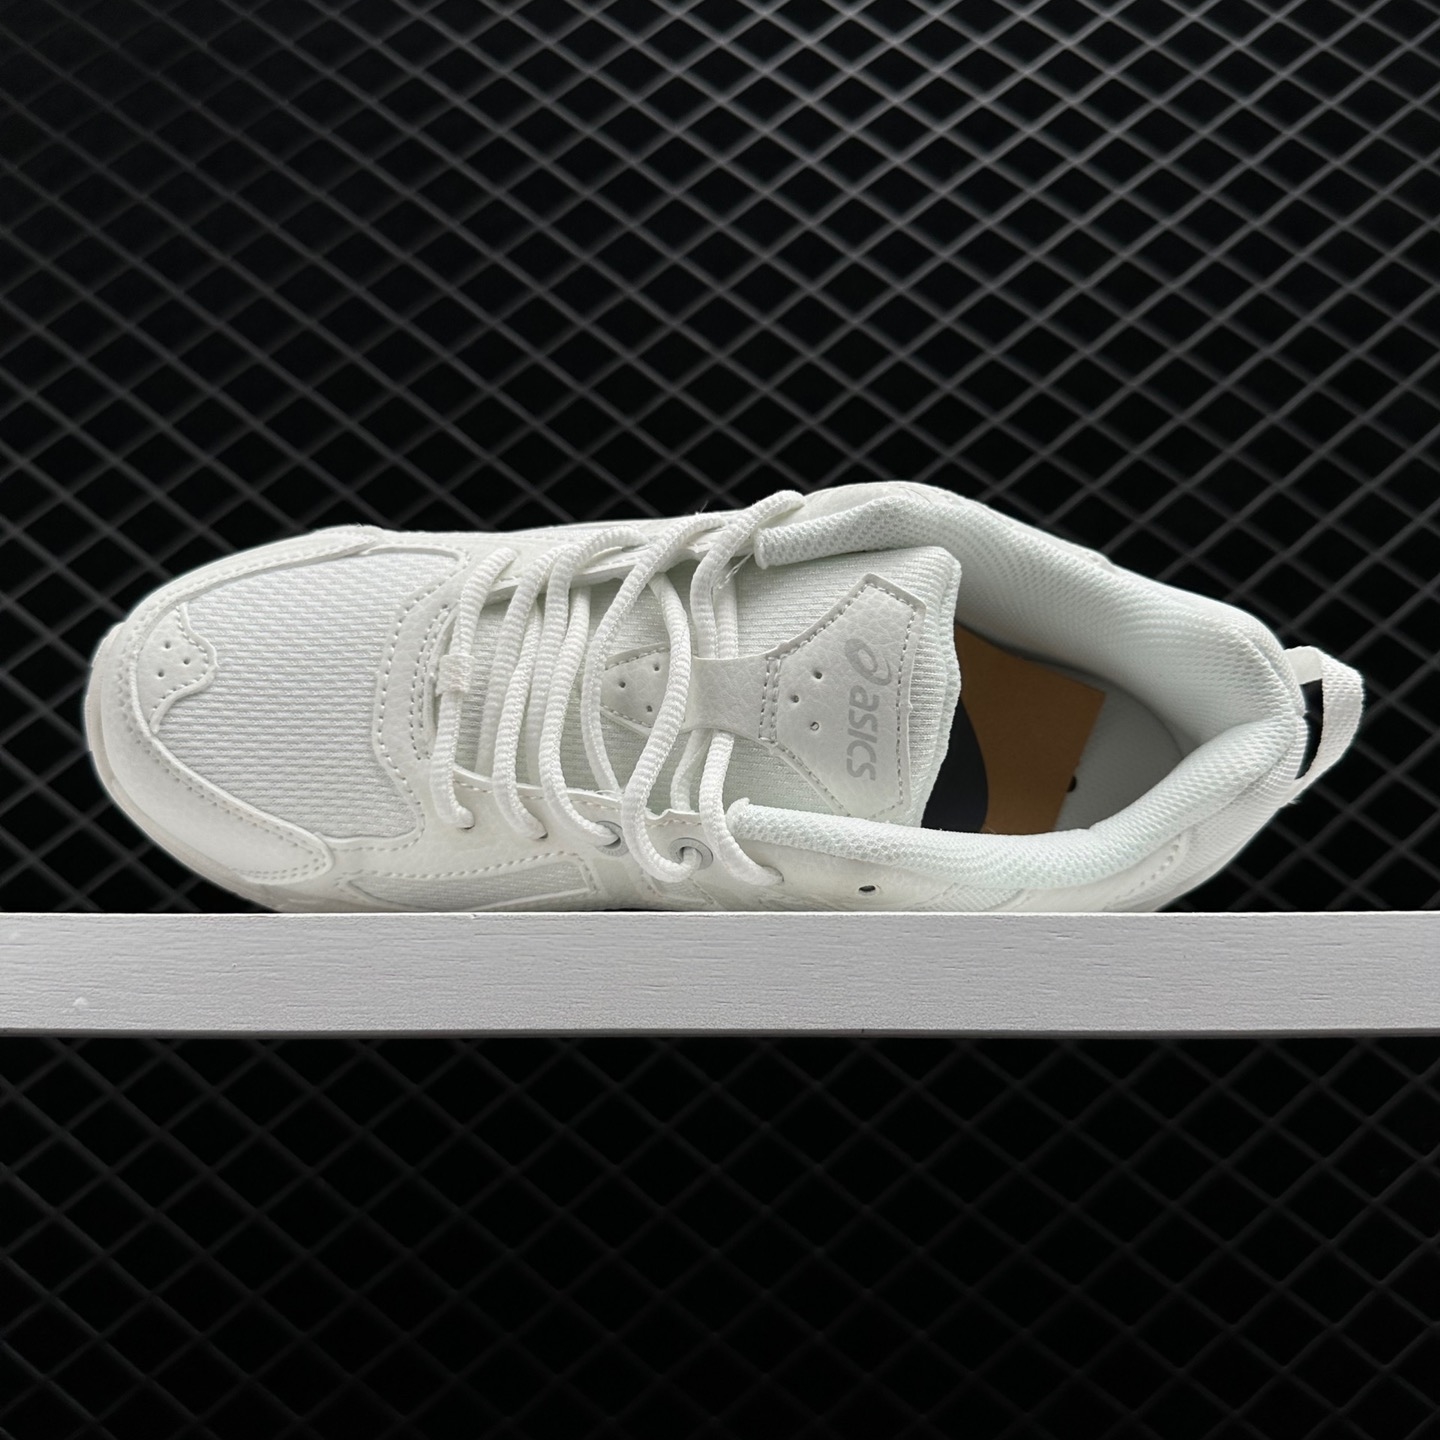 Asics Gel-Venture 6 Creamwhite: Lightweight Trail Running Shoes